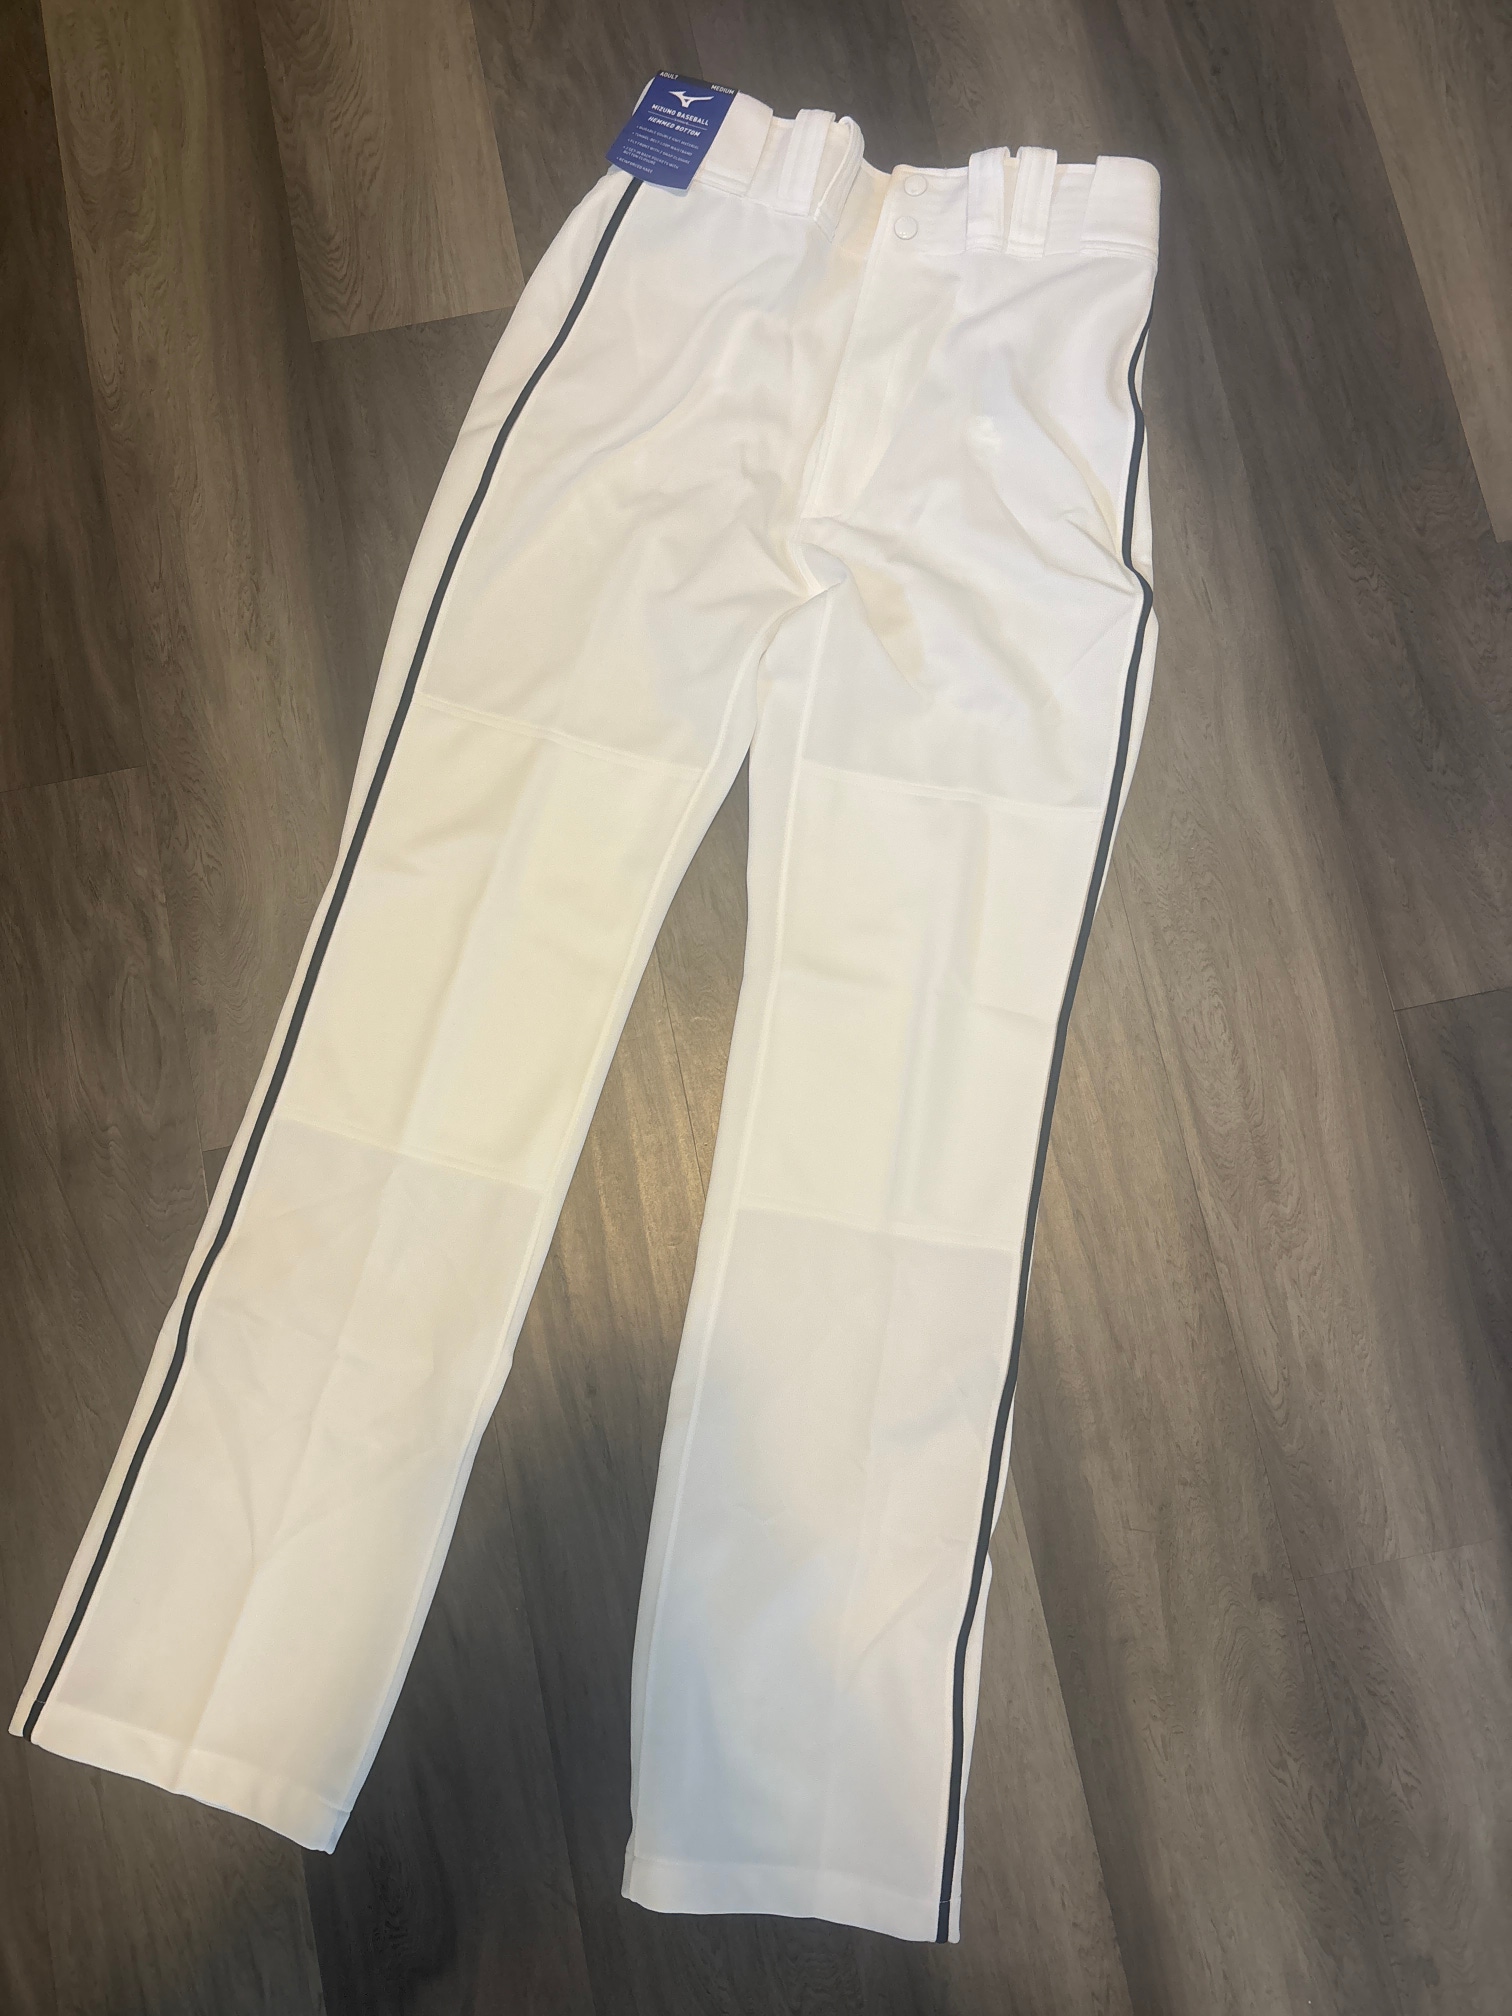 White Adult Men's New Medium Mizuno Game Pants